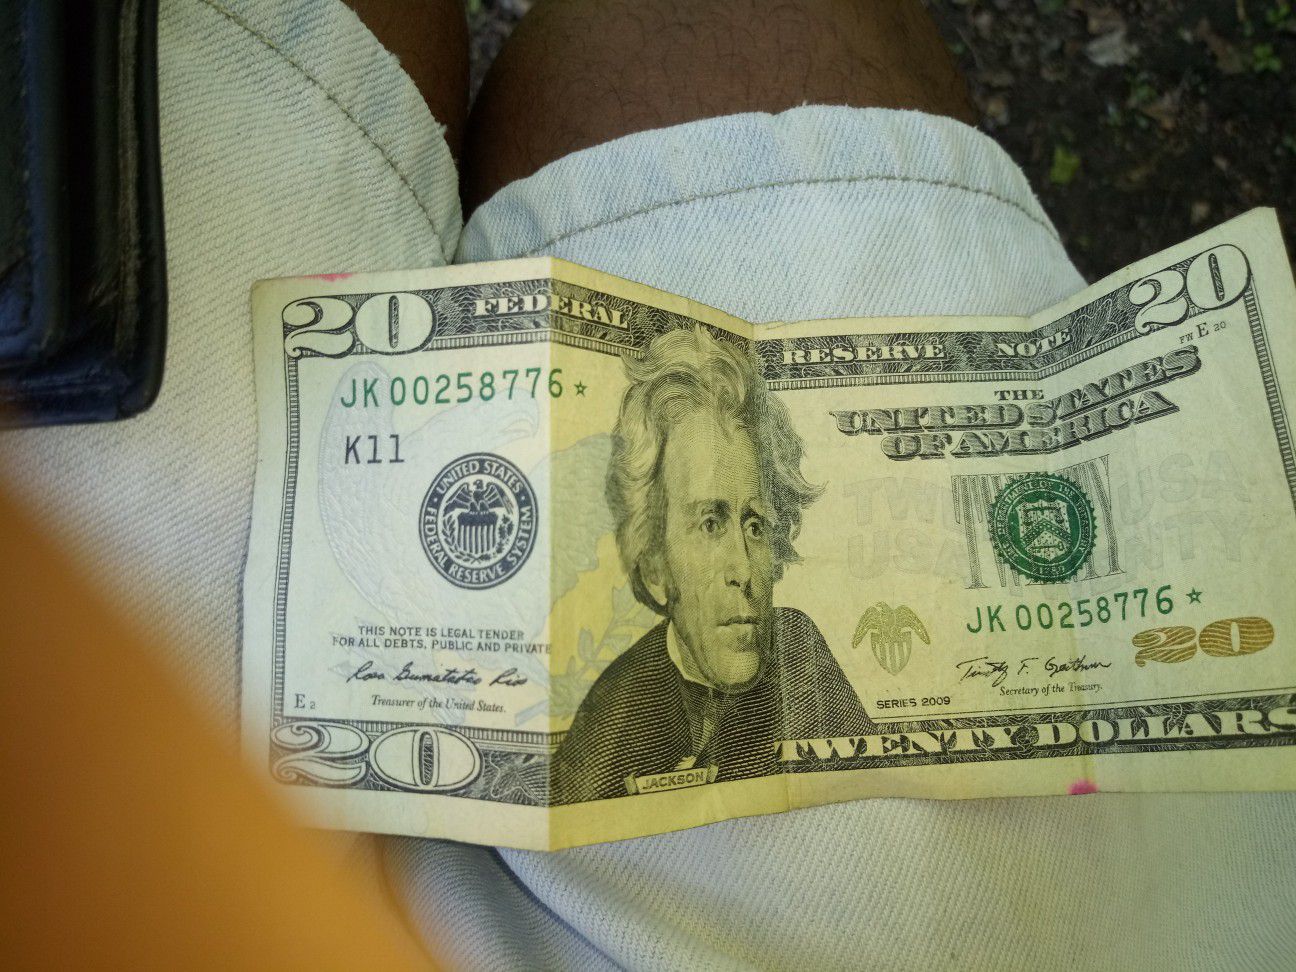 $20 bill star note